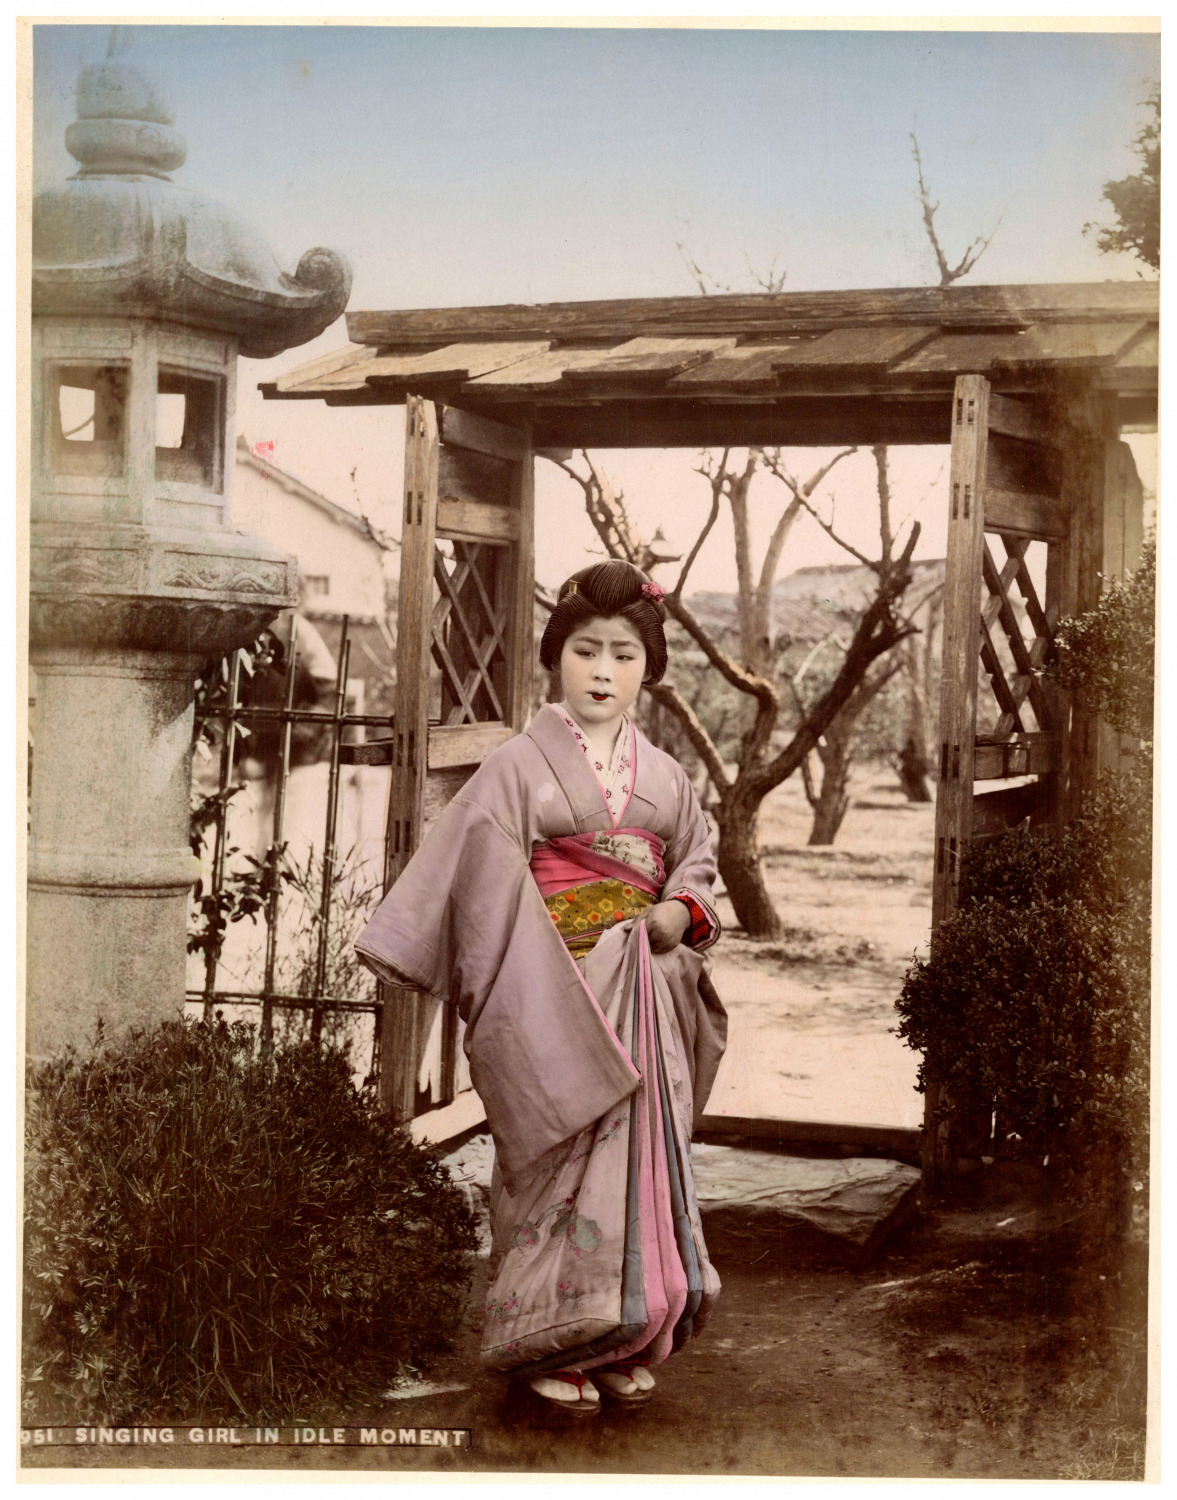 Japan, Singing Girl in Idle Moment, Vintage Geisha Print, Albumin Print Aqu